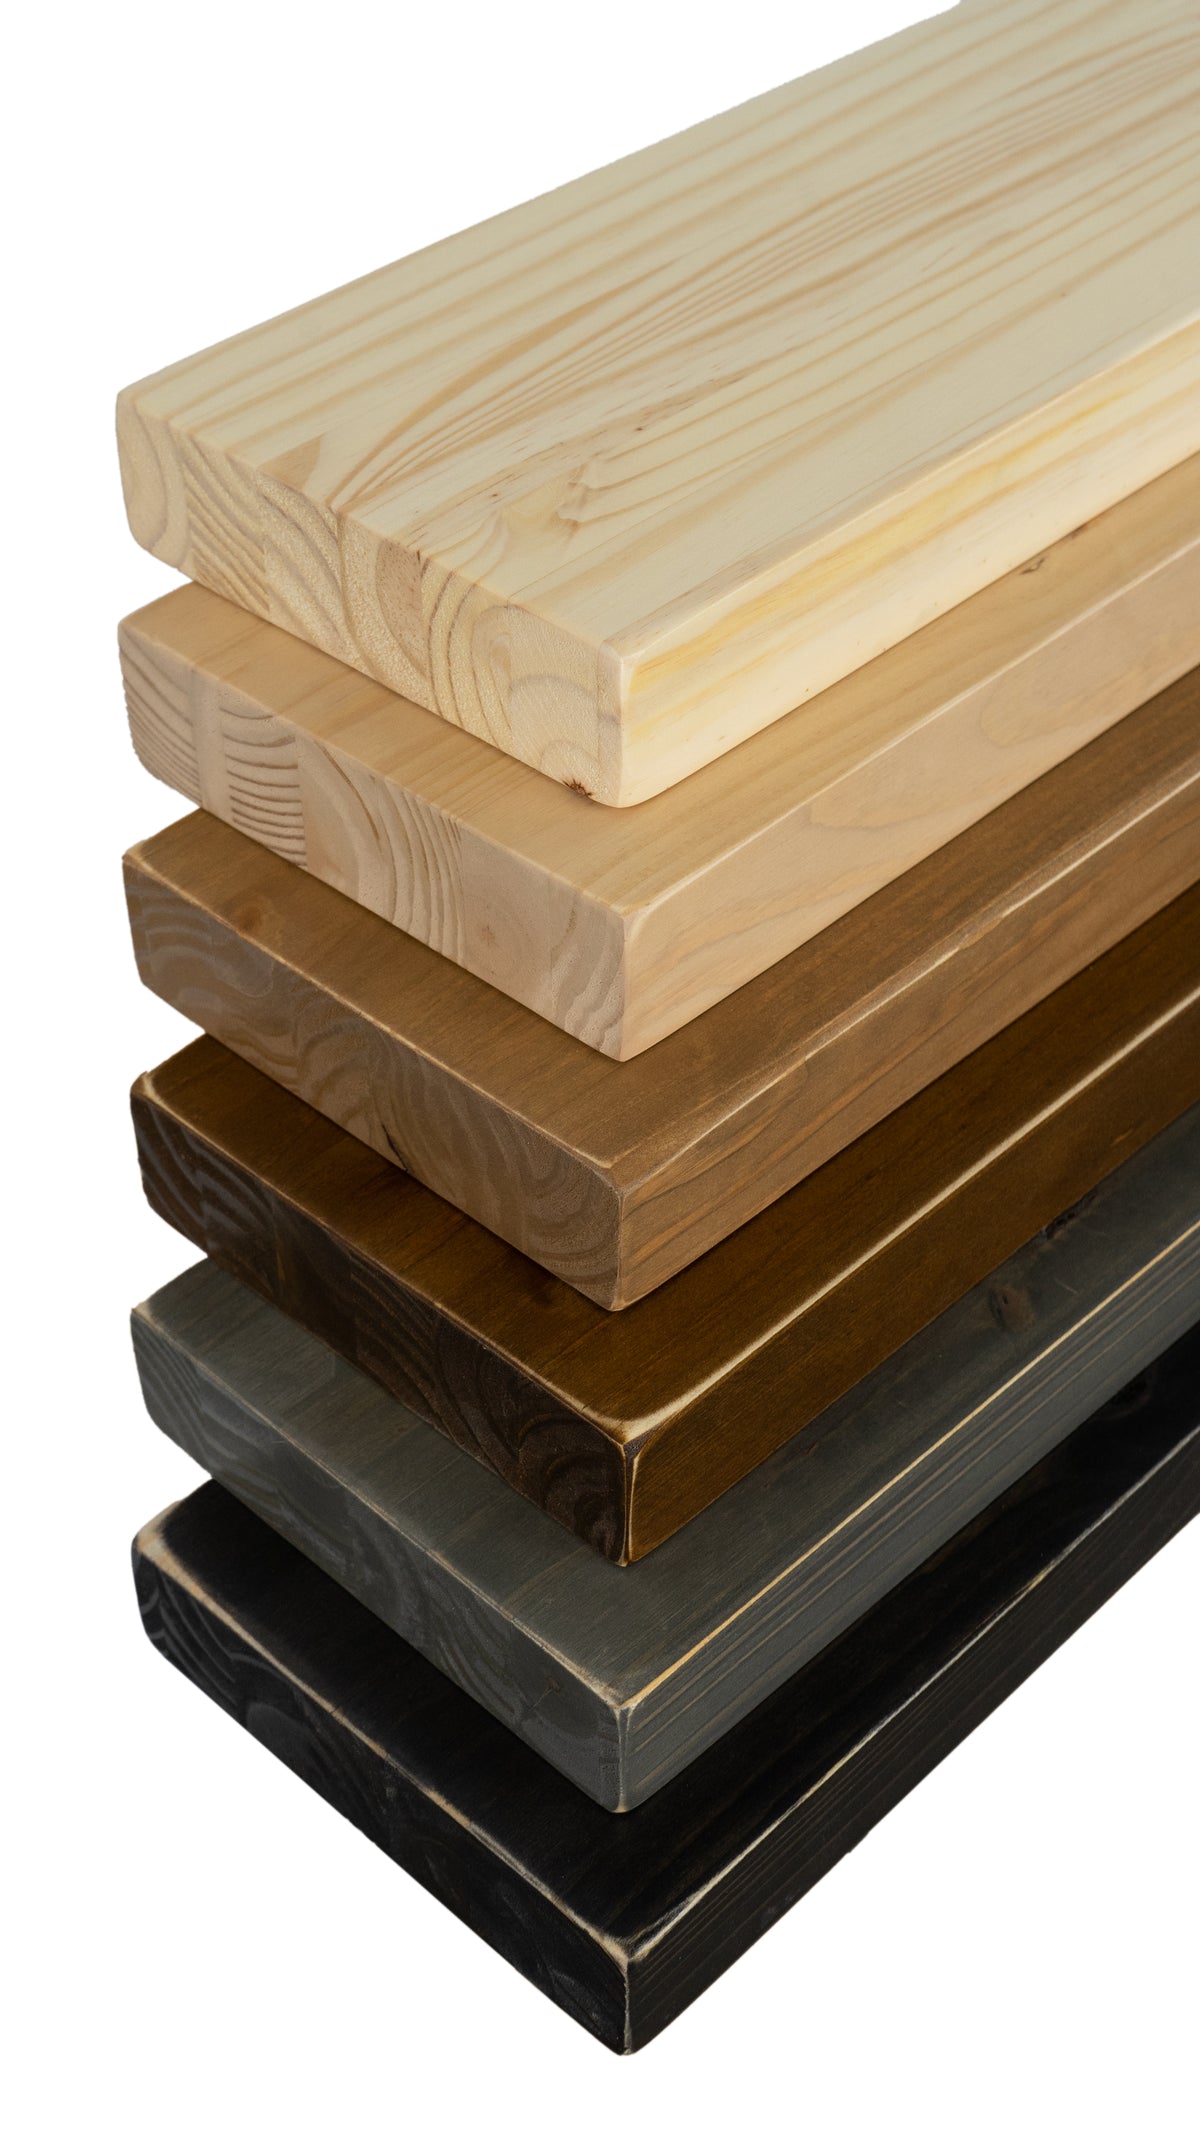 Solid Wood Floating Shelf Kits - Dakota Timber Co. - Real Wood Floating Shelves - Dakota Timber Shelves